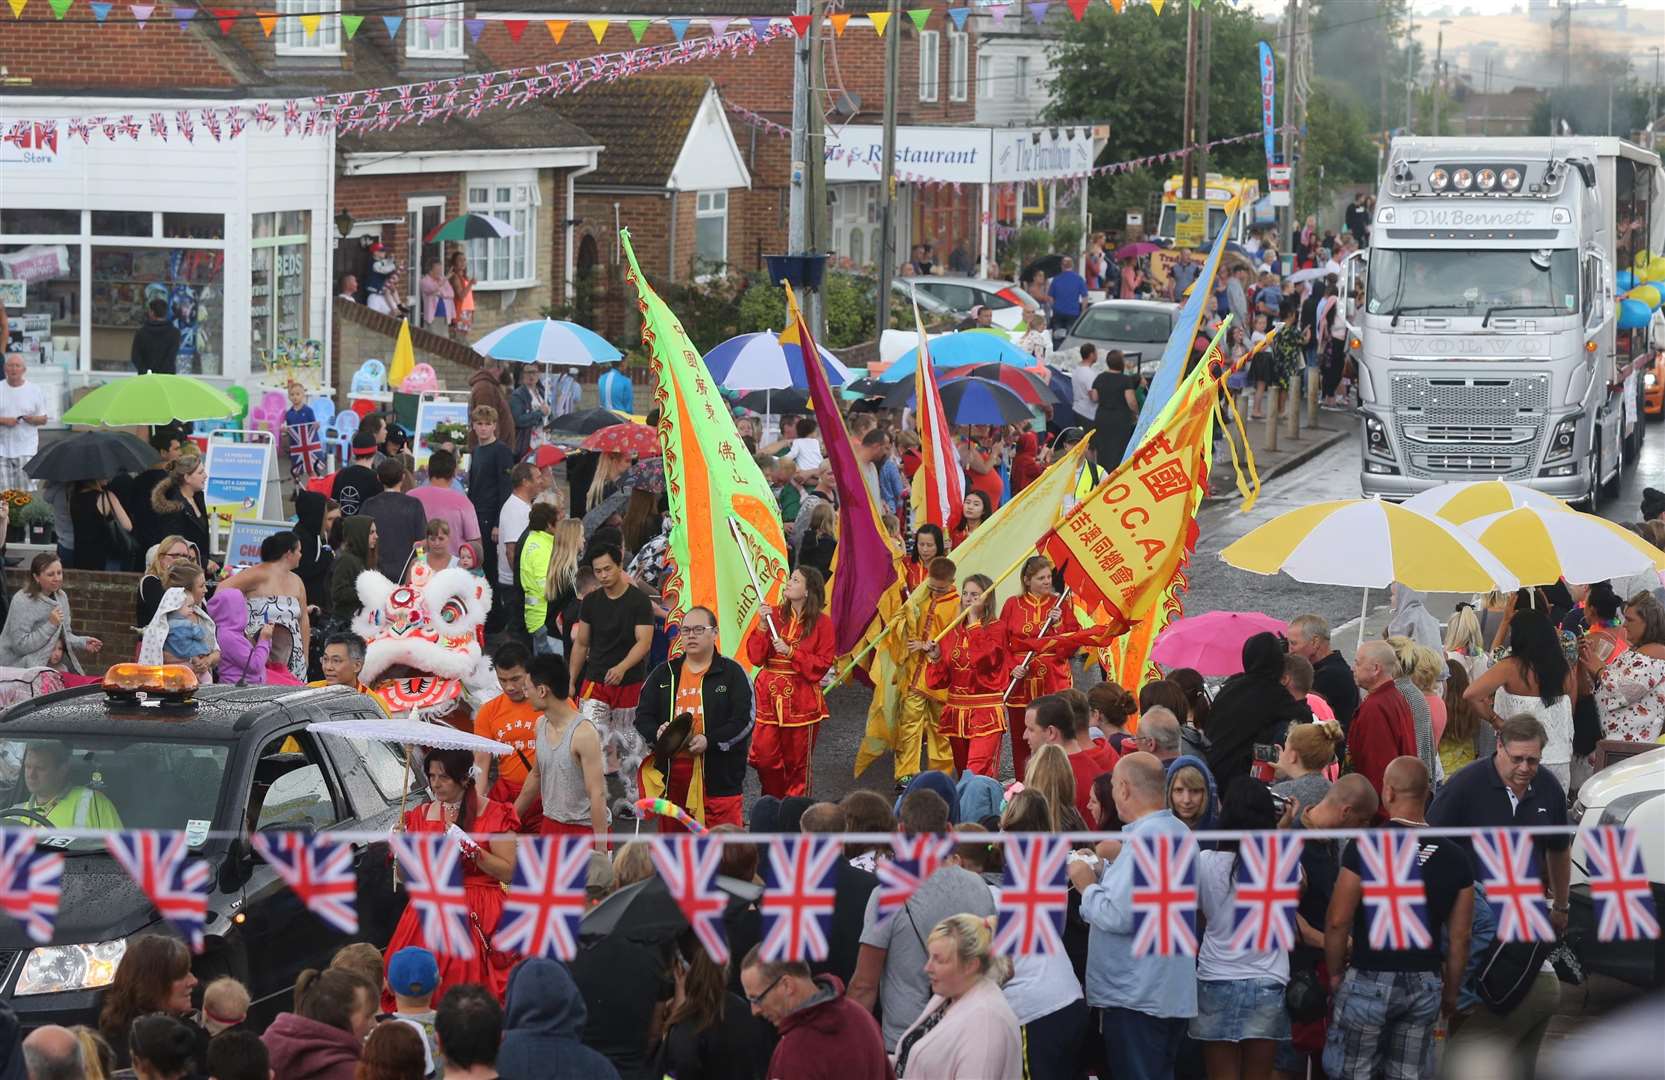 Leysdown Carnival kicks off this weekend. Picture: John Westhrop